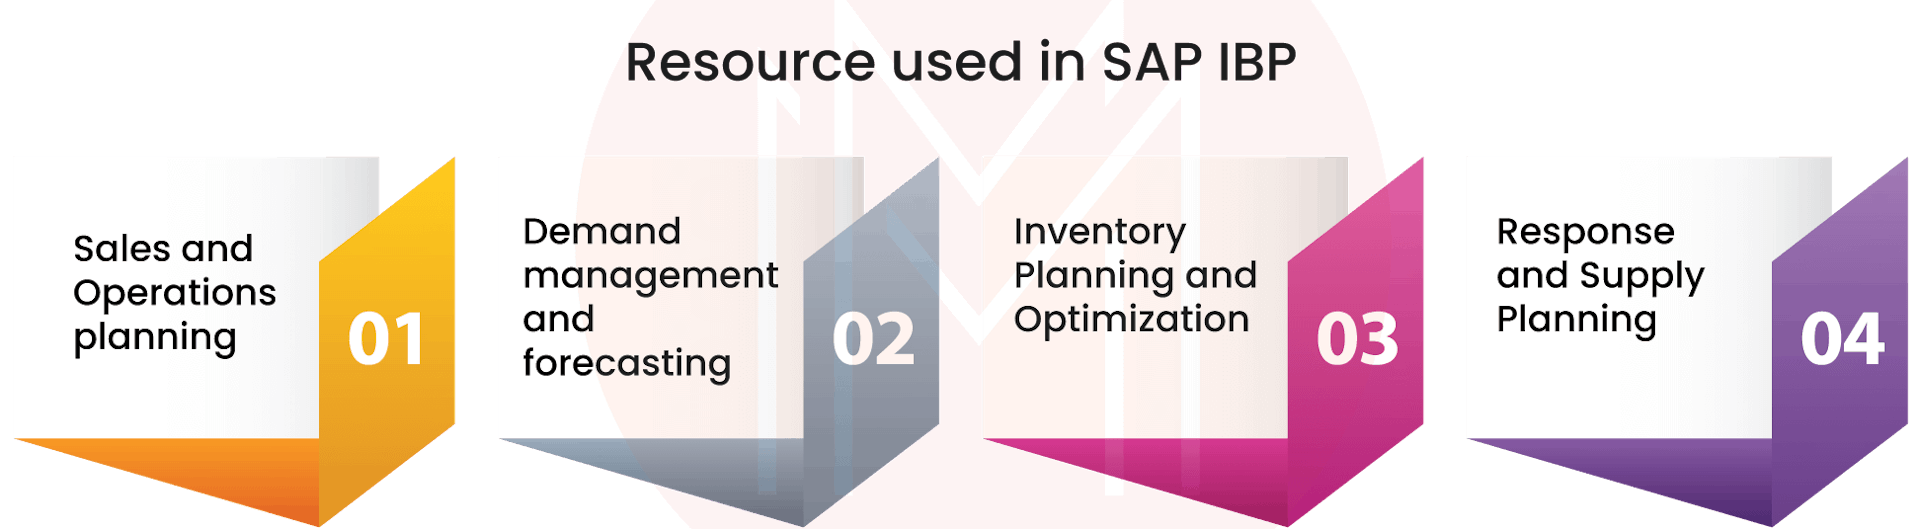 Resources of SAP IBP